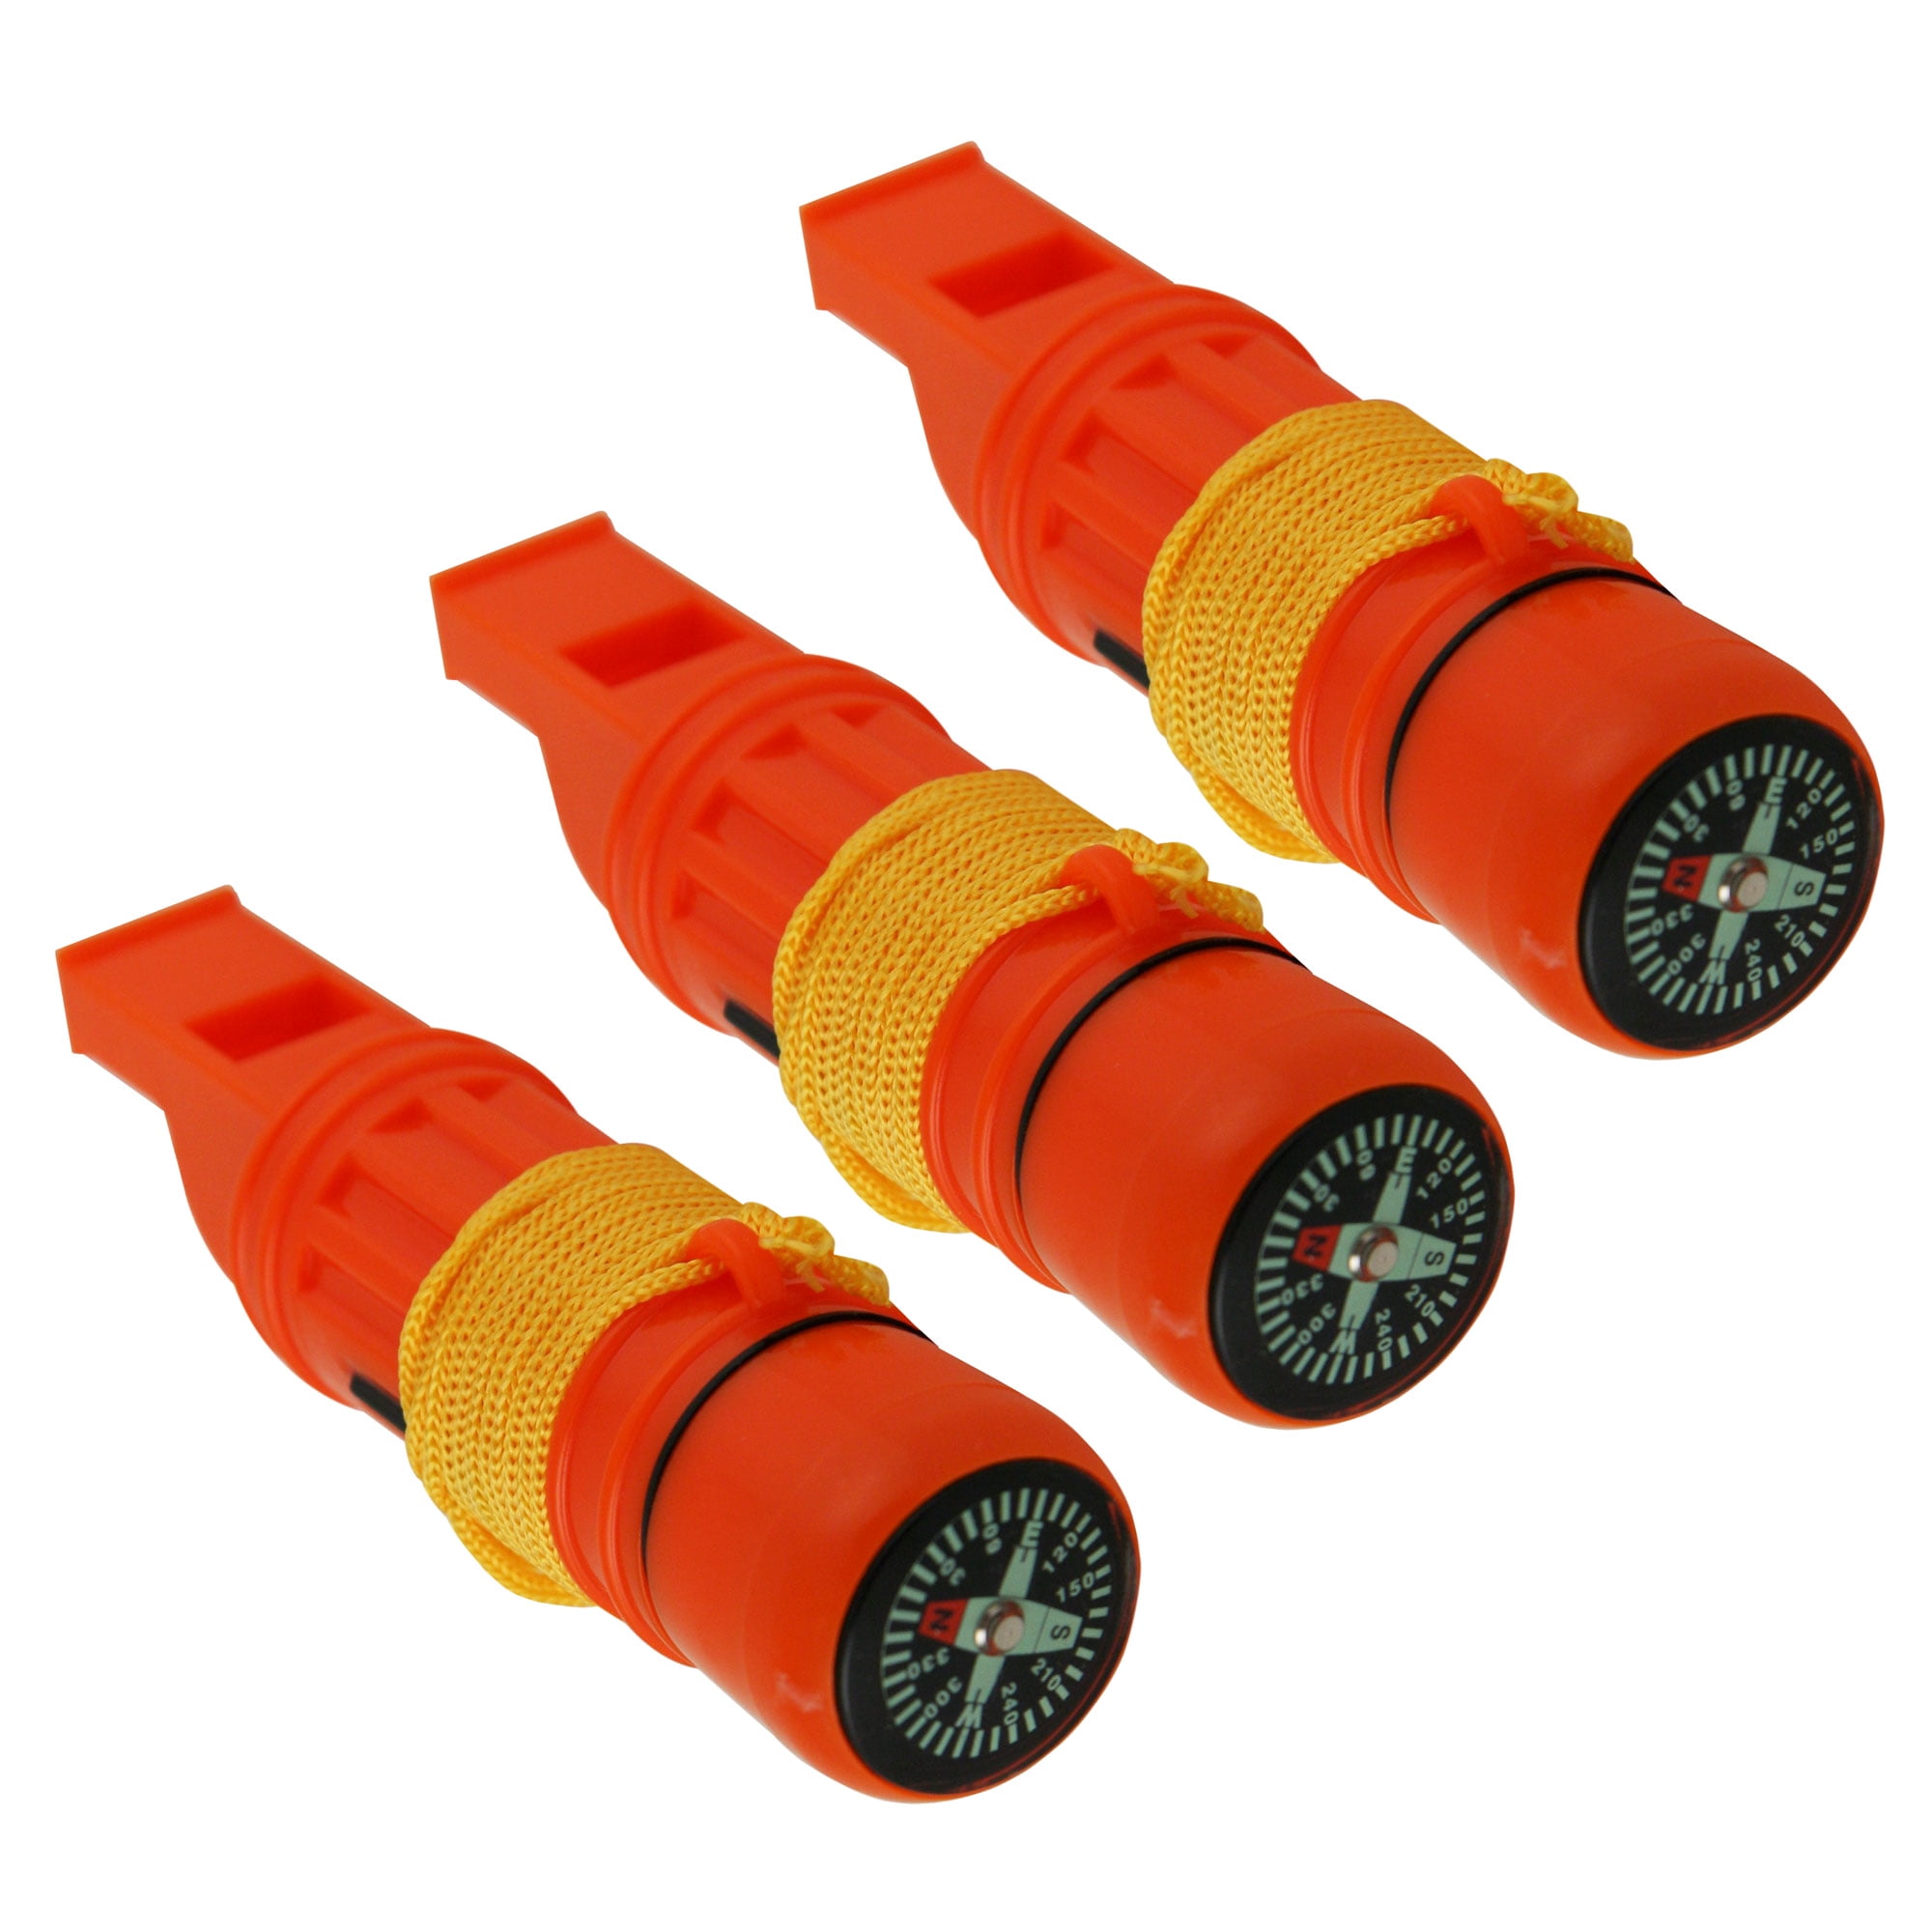 Bright Safety Orange 5ive Star Gear Ultra-Light & Ultra-Loud Emergency Whistle 